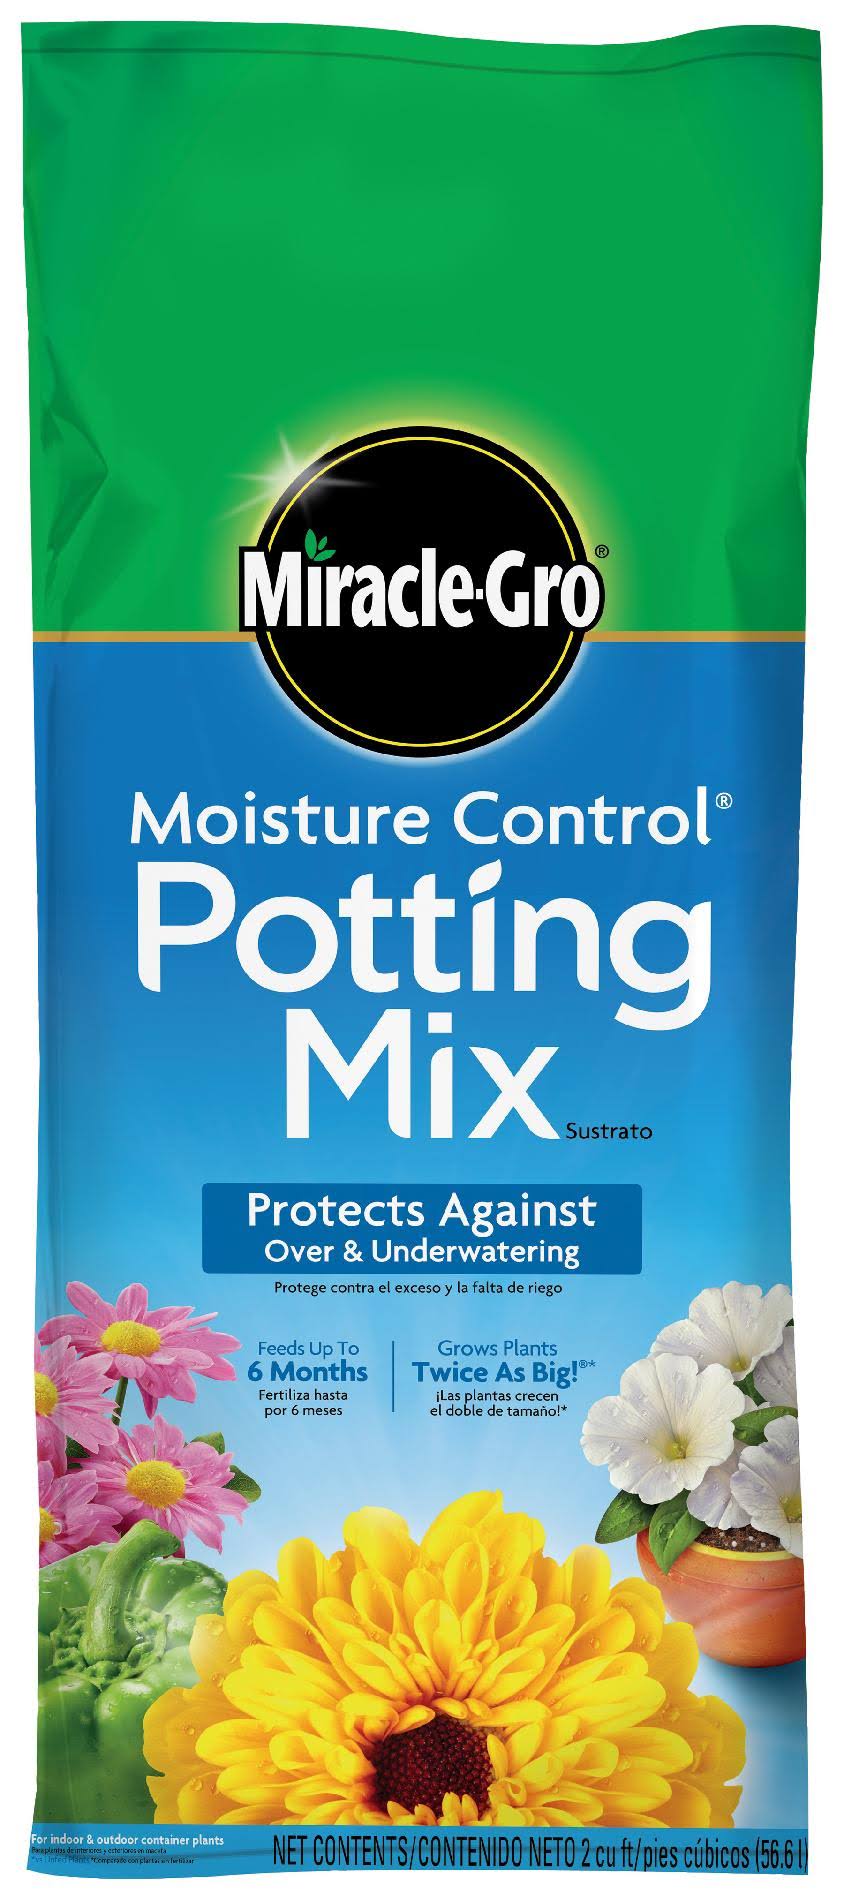 Miracle-Gro Moisture Control Potting Mix - 2cu ft